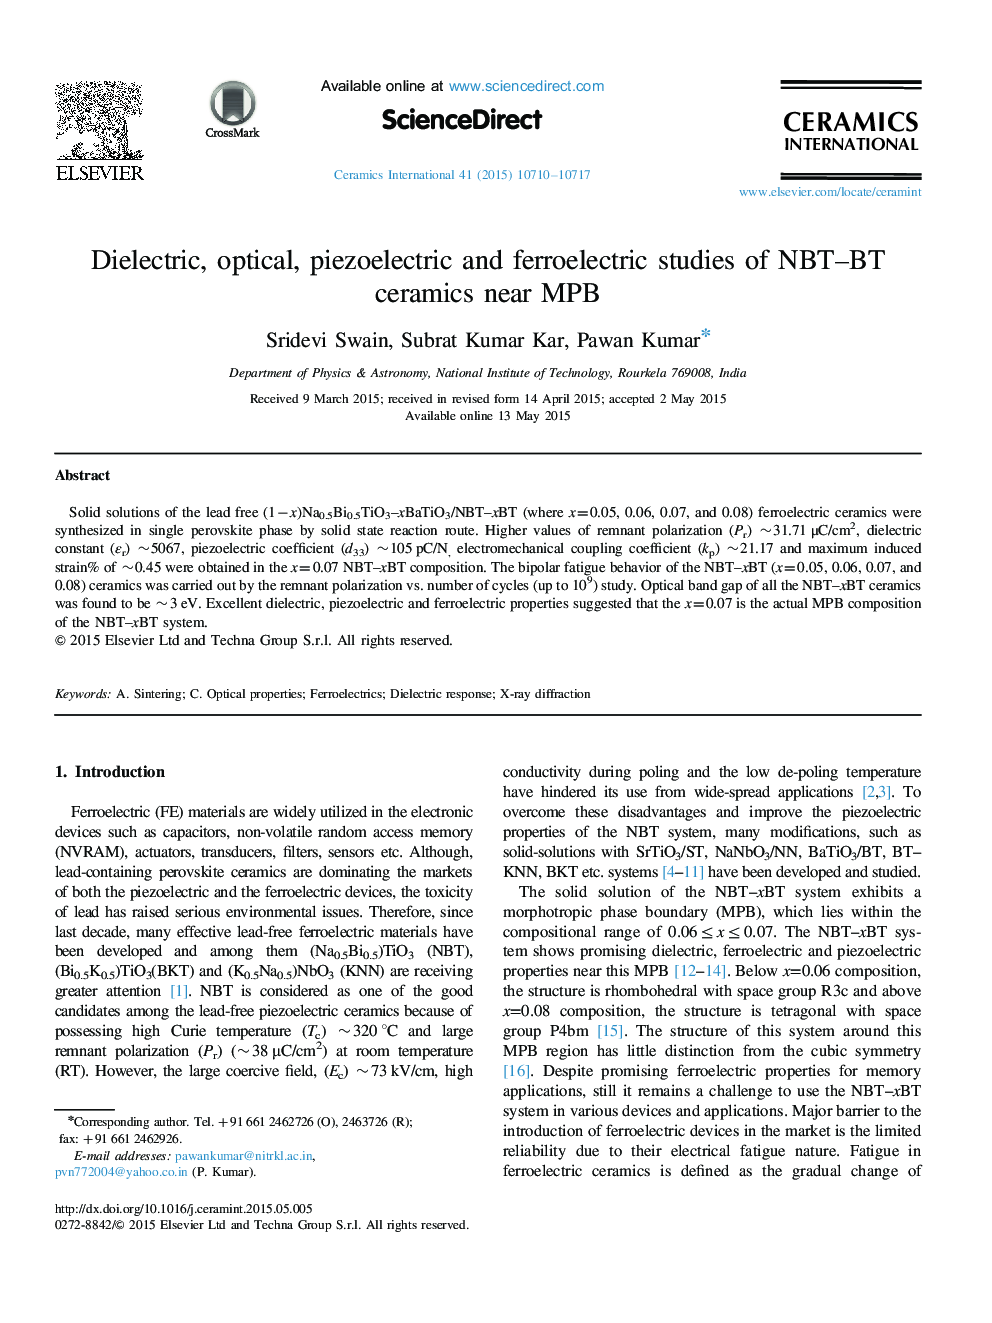 Dielectric, optical, piezoelectric and ferroelectric studies of NBT–BT ceramics near MPB